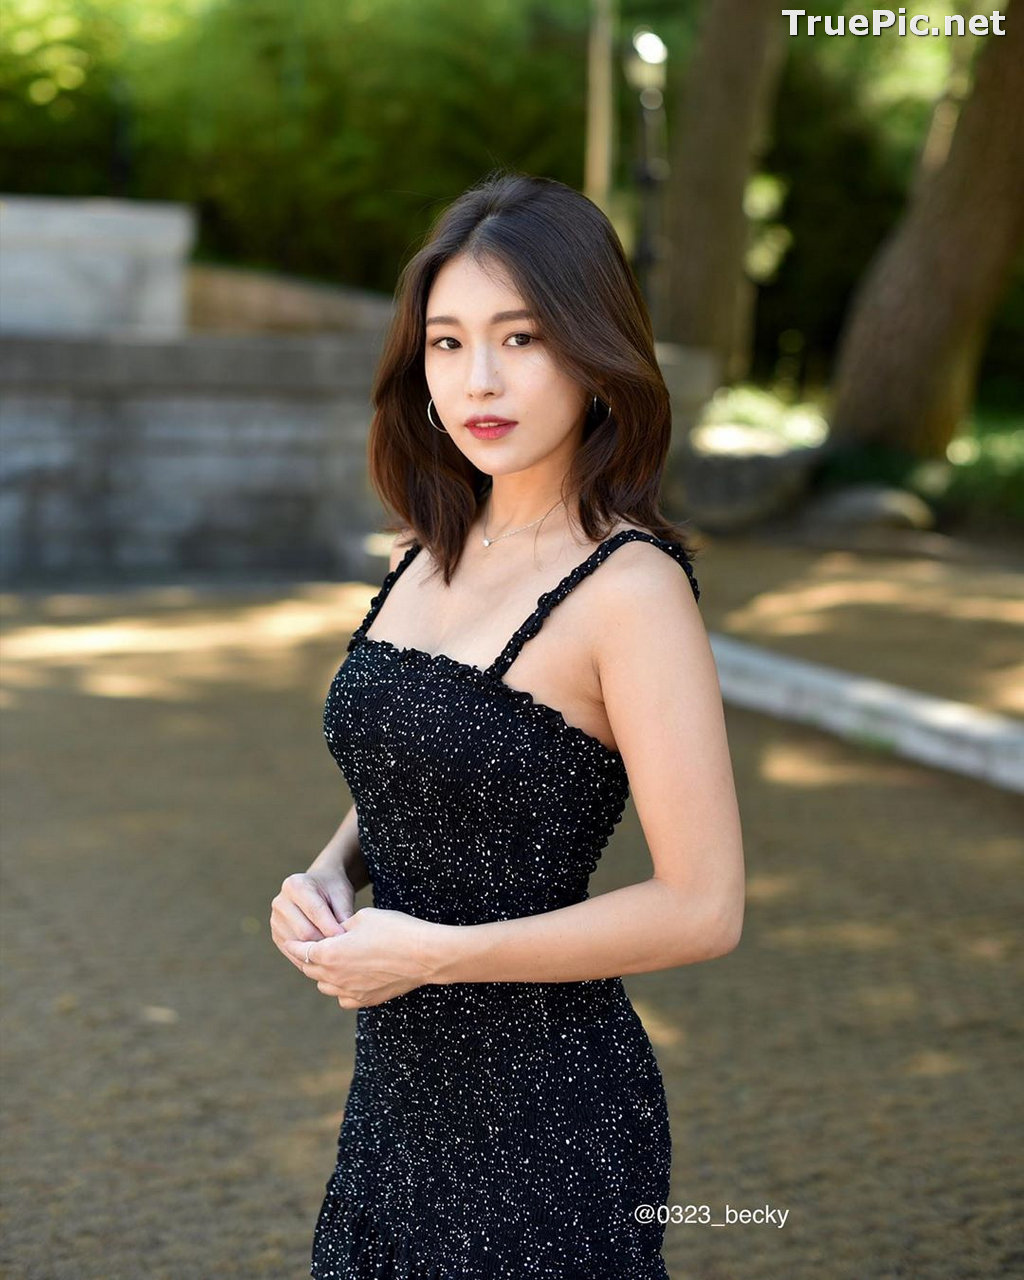 Image Korean Sexy Model - Becky's Hot Photos 2020 - TruePic.net - Picture-31